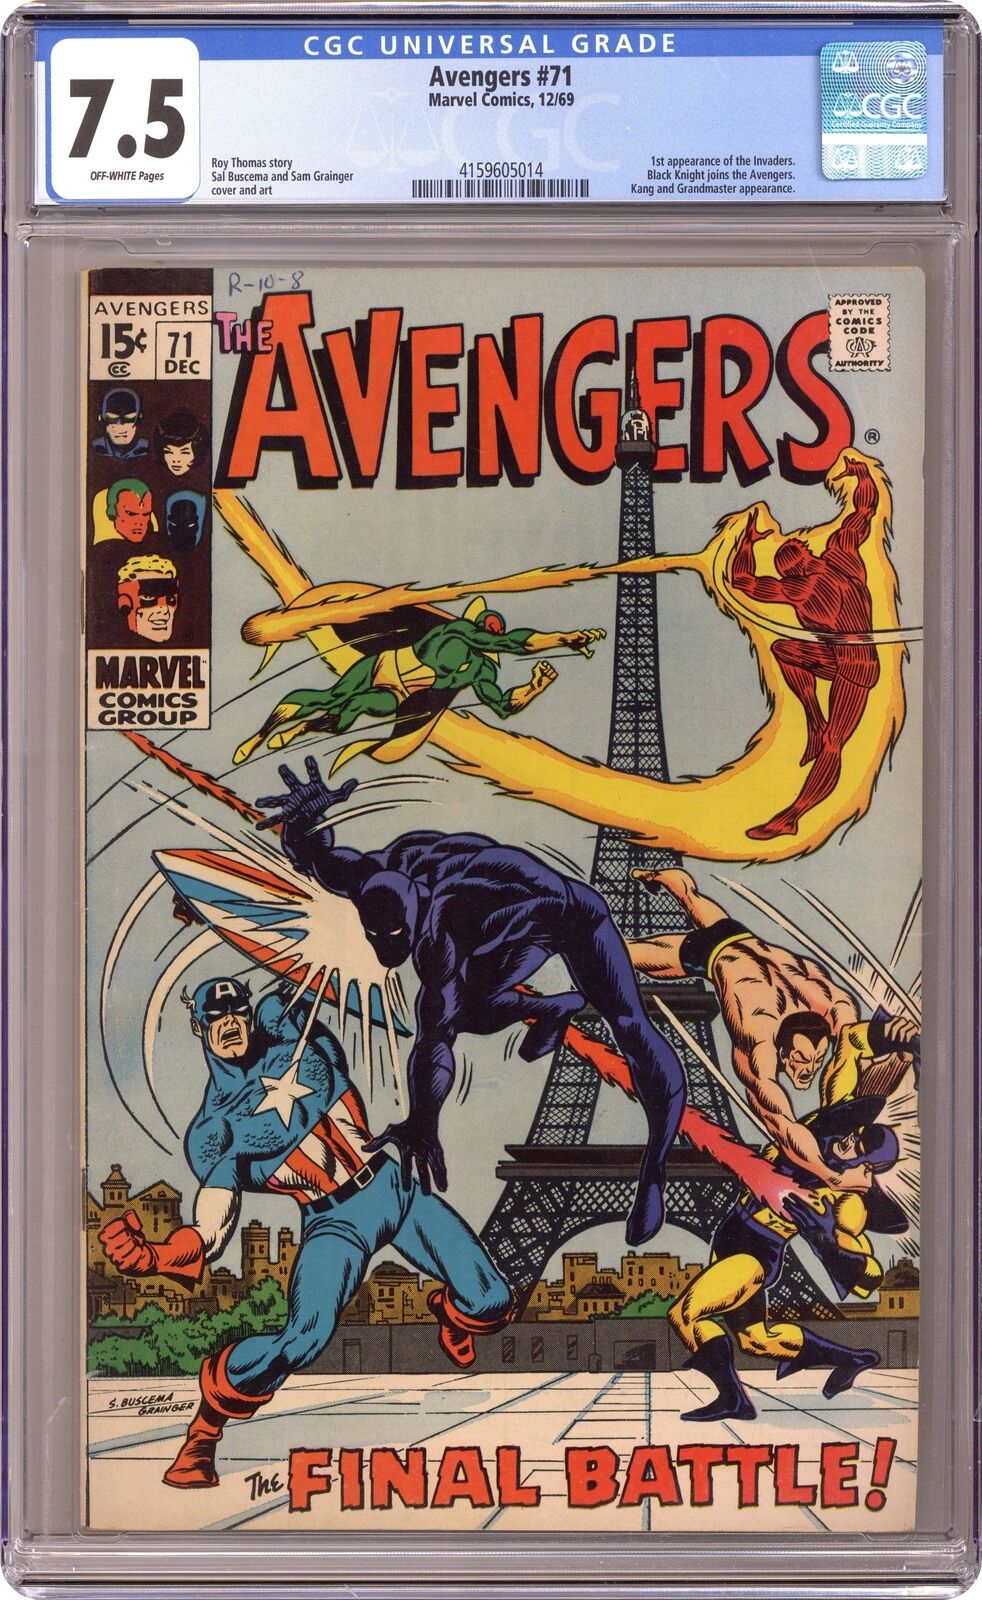 Avengers #71 CGC 7.5 1969 4159605014 1st app. Invaders